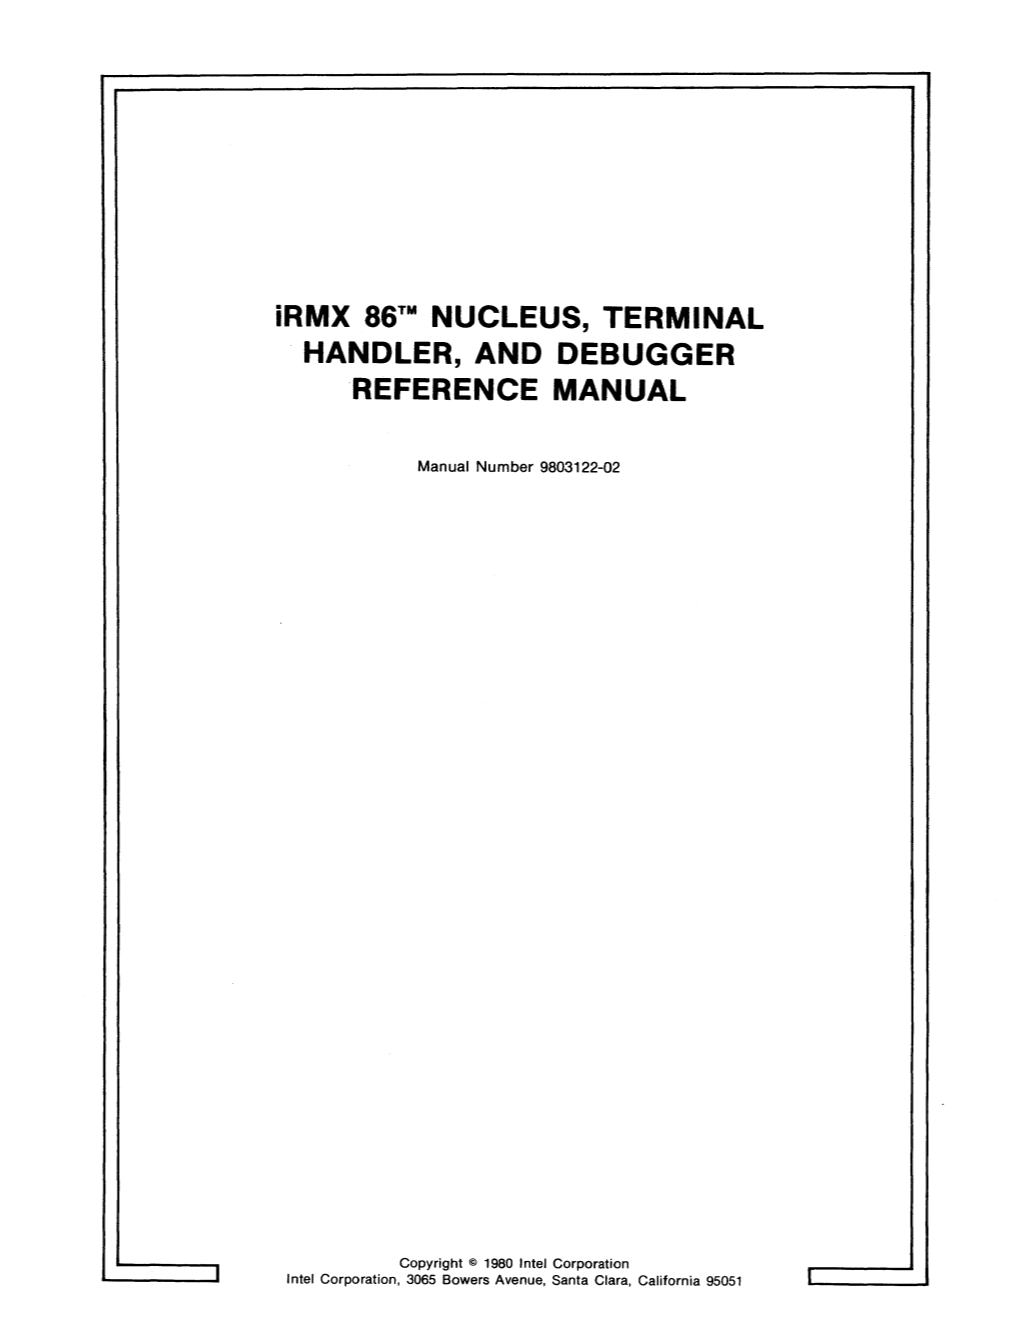 Irmx 86 Nucleus, Terminal Handler, and Debugger Reference Manual